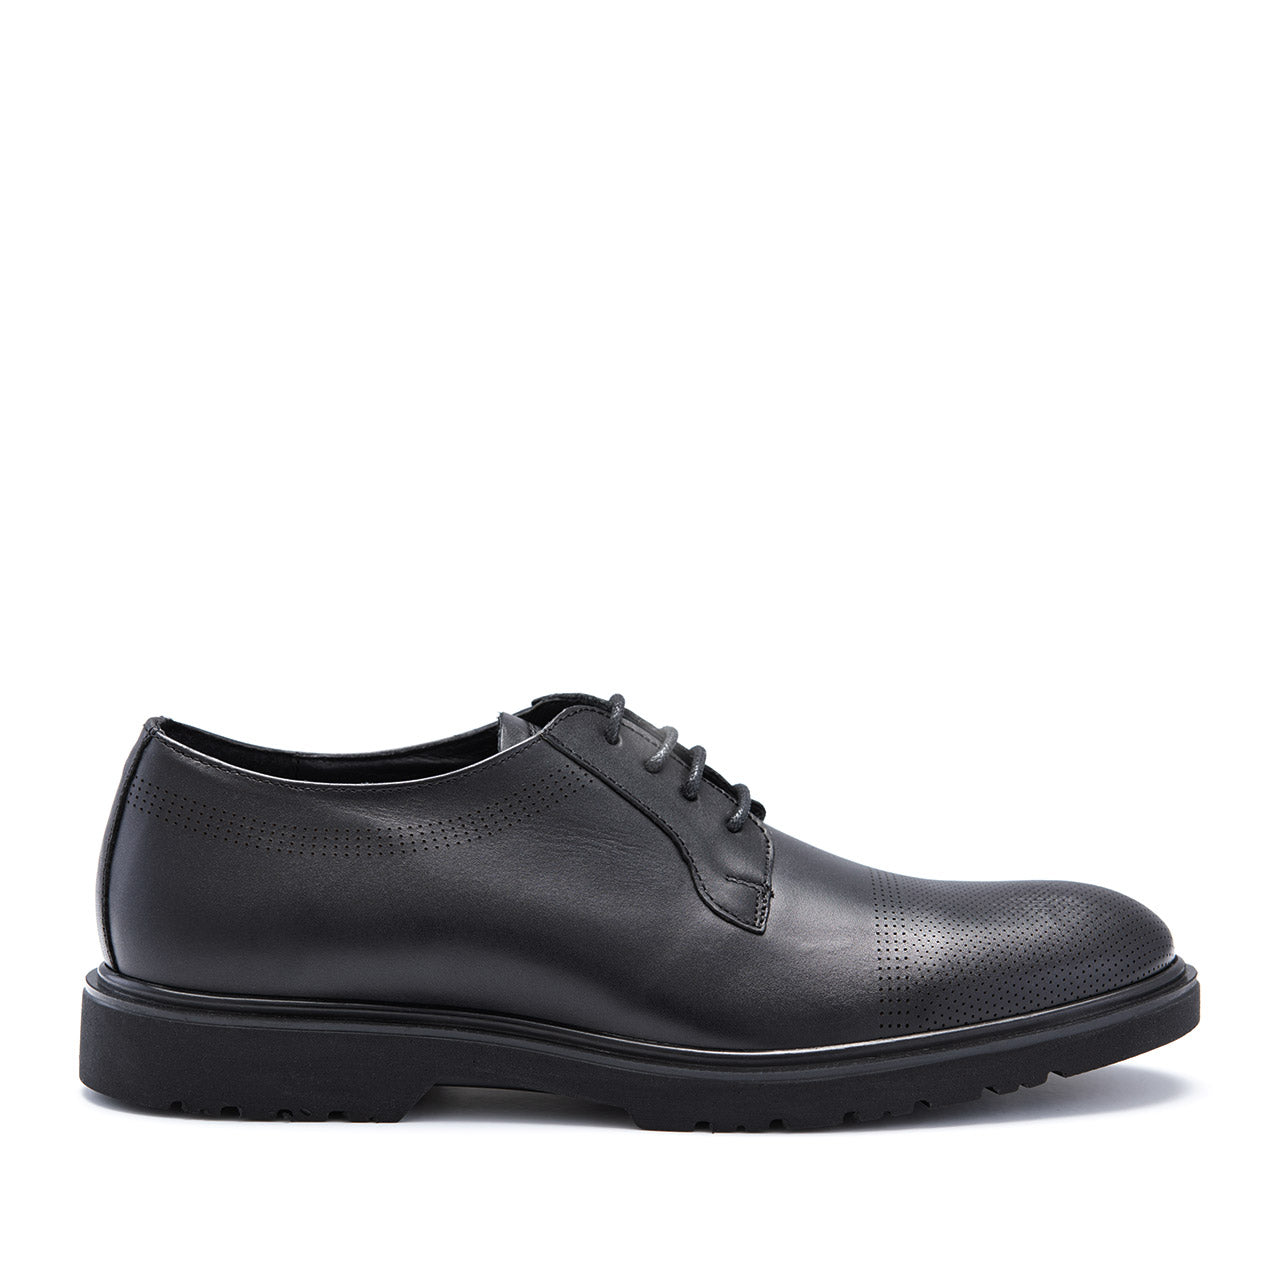 Pantofi eleganti barbati Viktor negru gravat